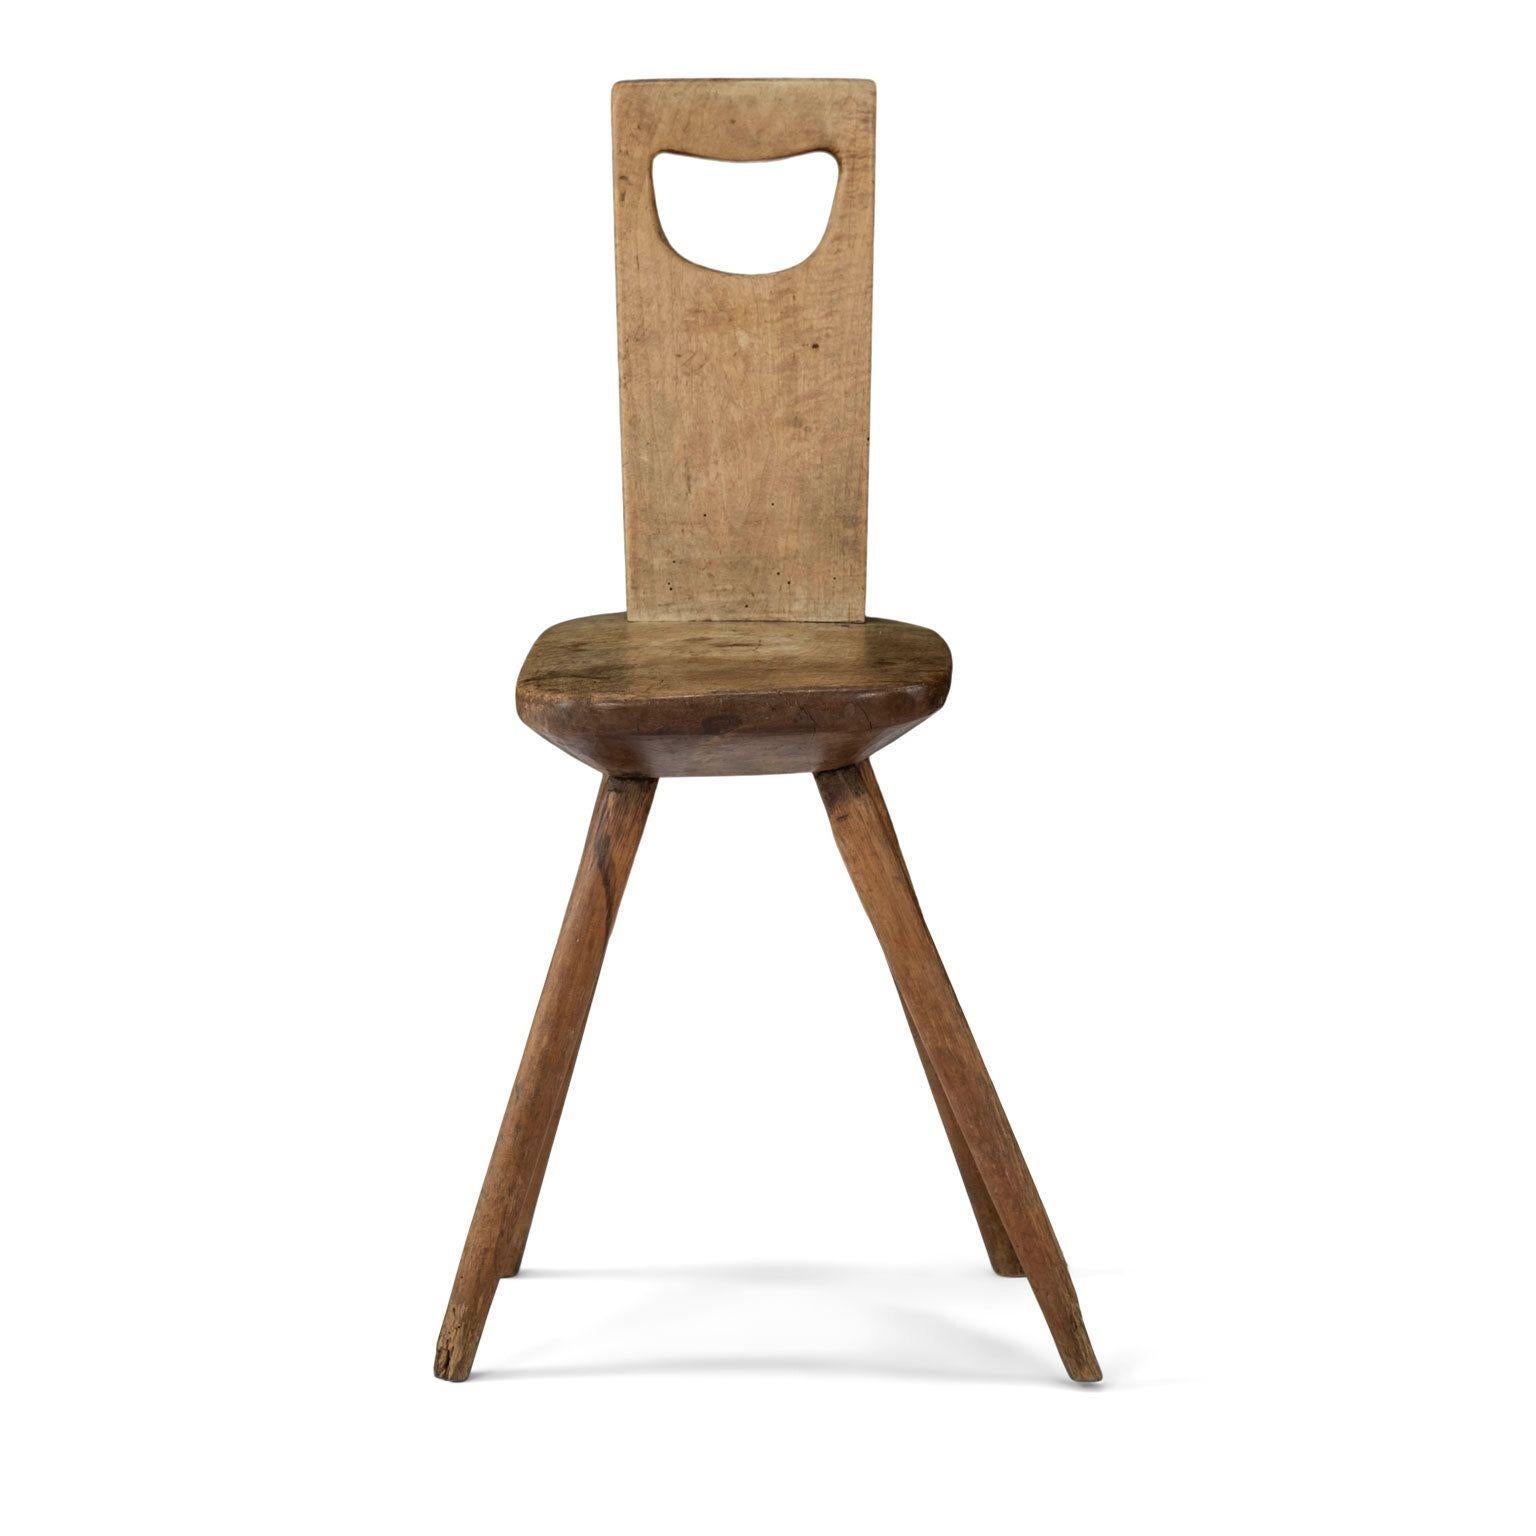 Ash Charming Swedish Rustic Chair